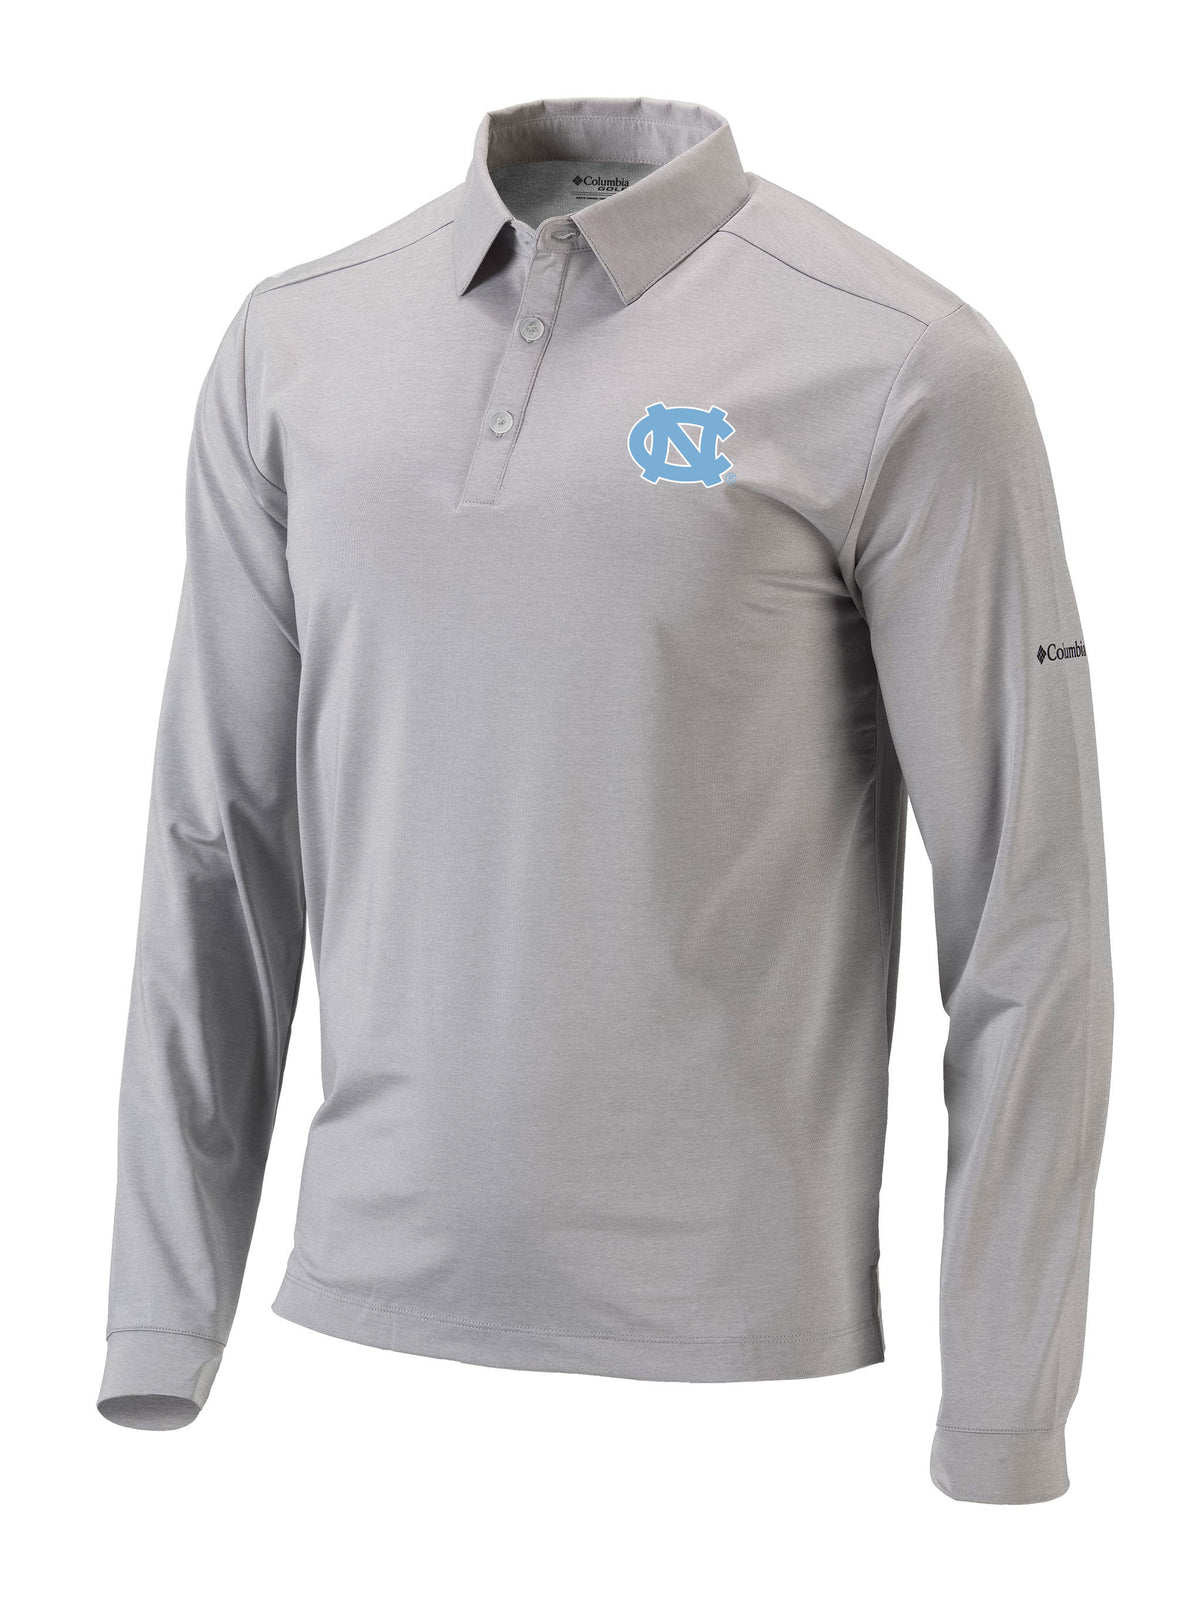 Omni-Wick Long-Sleeve UNC Polo Shirt